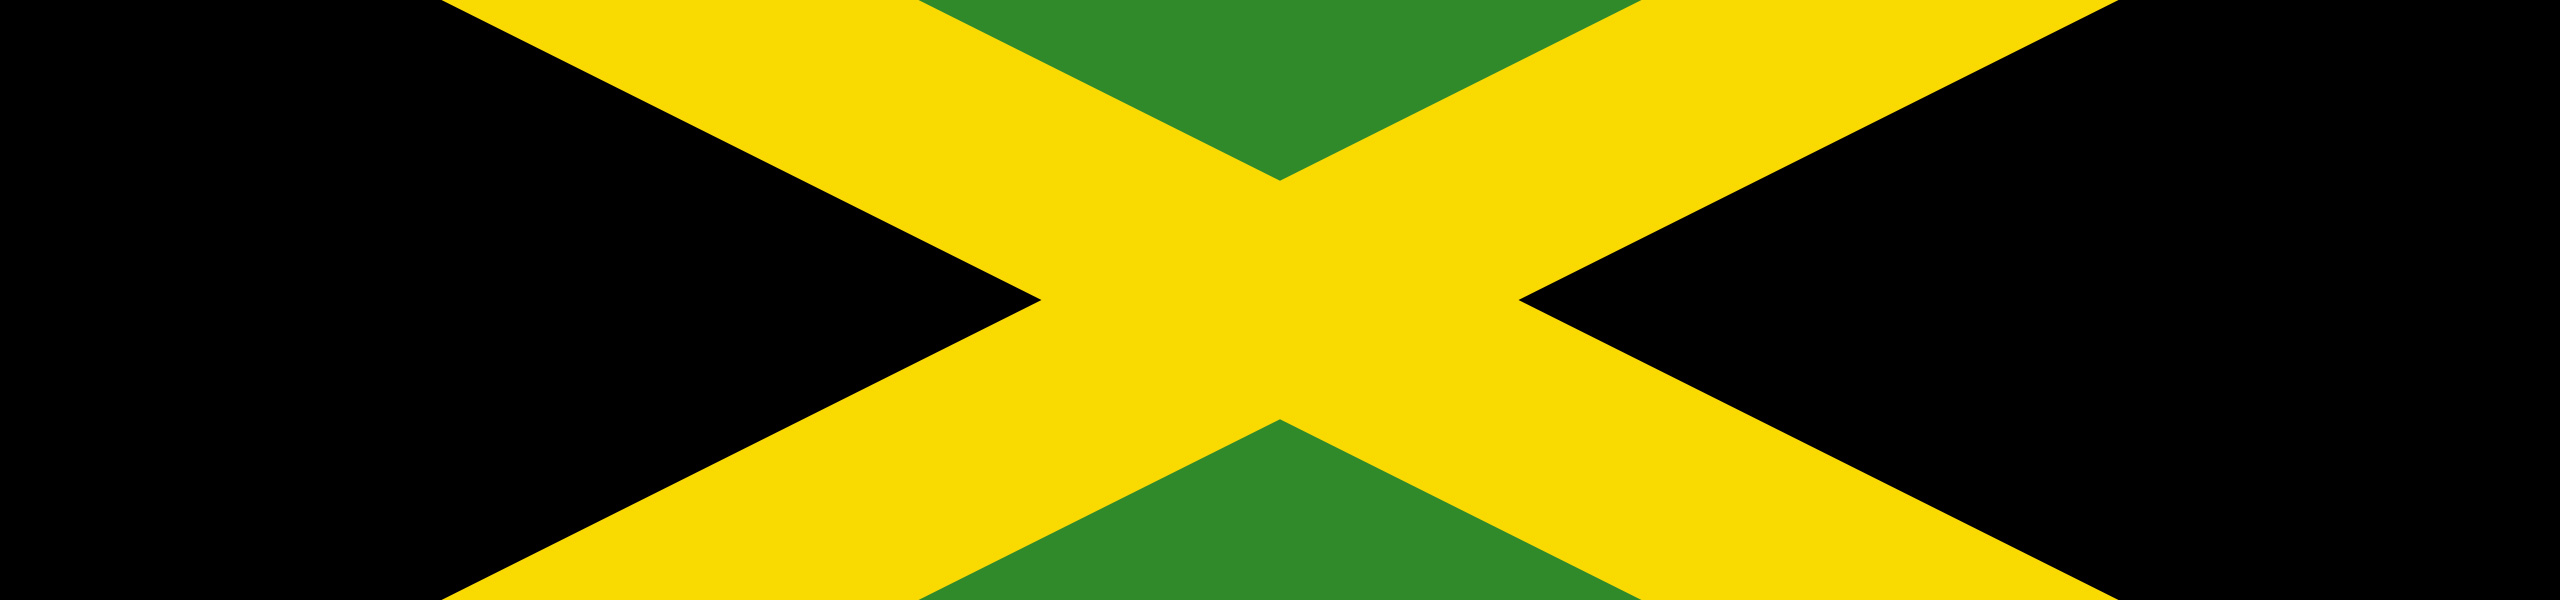 BestTours Jamaica - Blog - Post